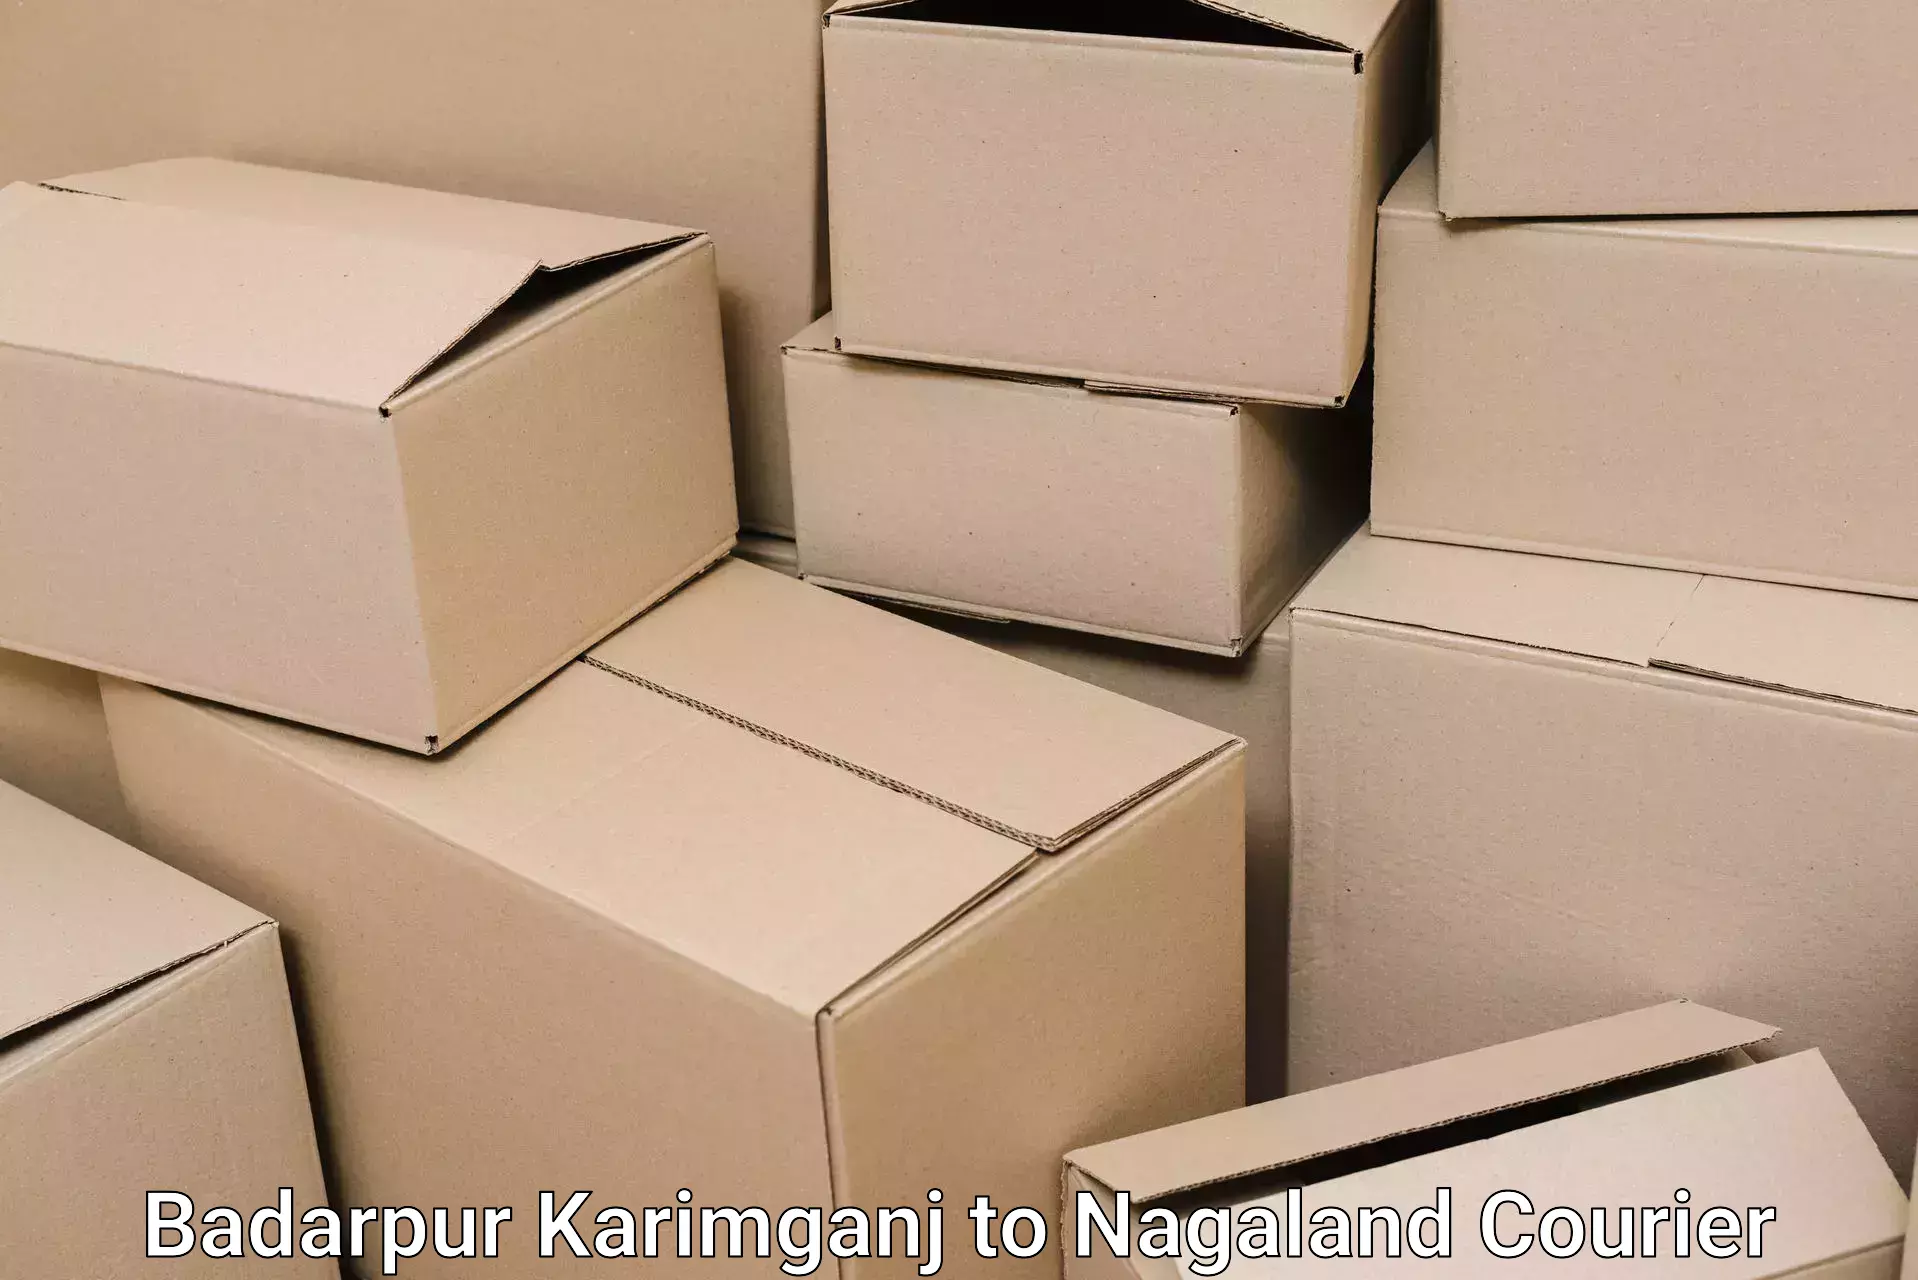 Home moving specialists Badarpur Karimganj to Nagaland